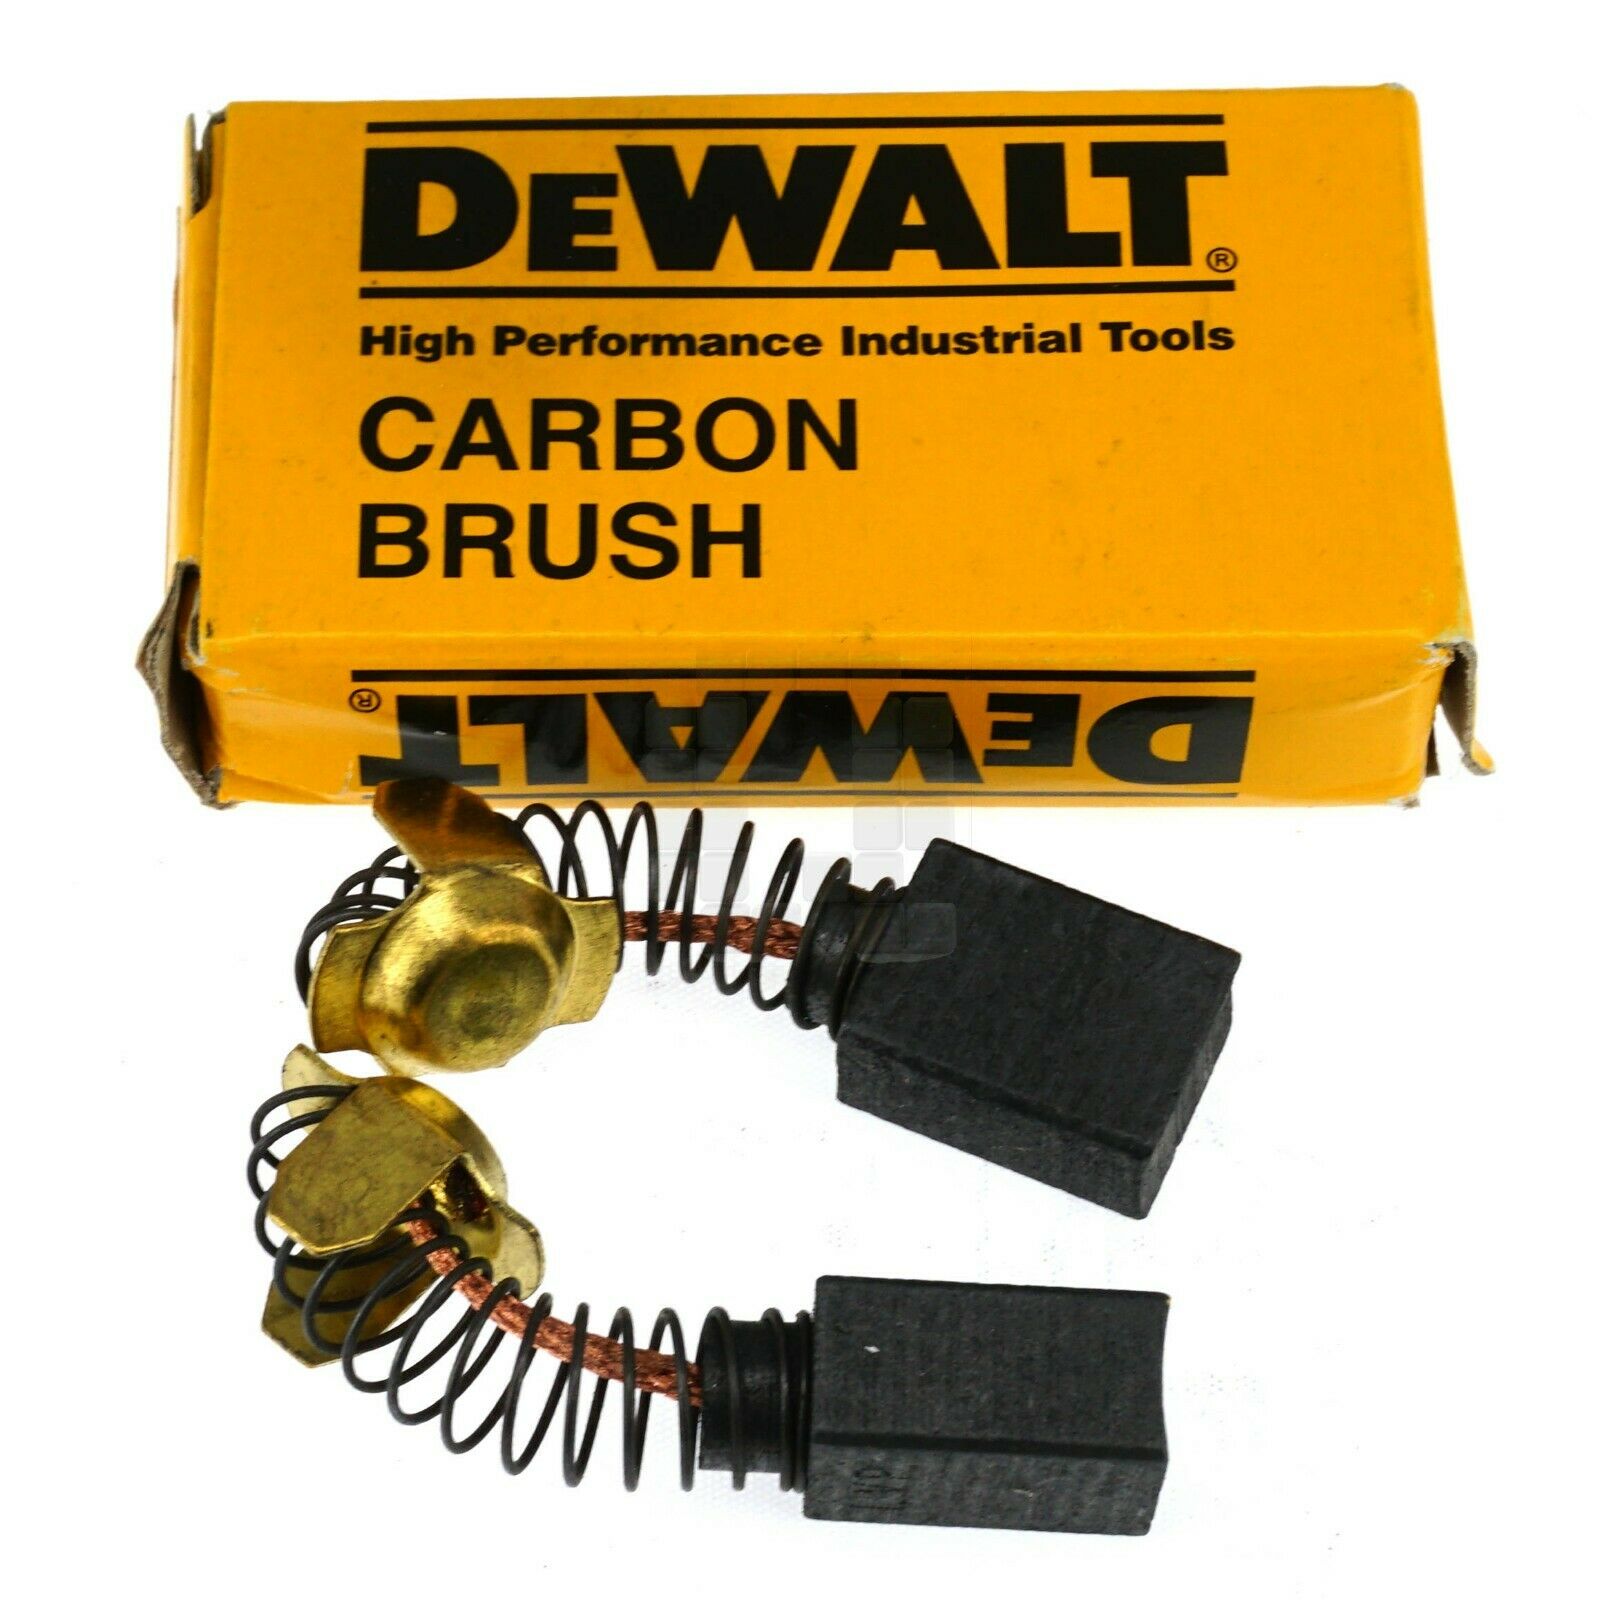 Dewalt N398321 Carbon Brush Service Kit, Pair, 120v, For Dwp849 Polisher